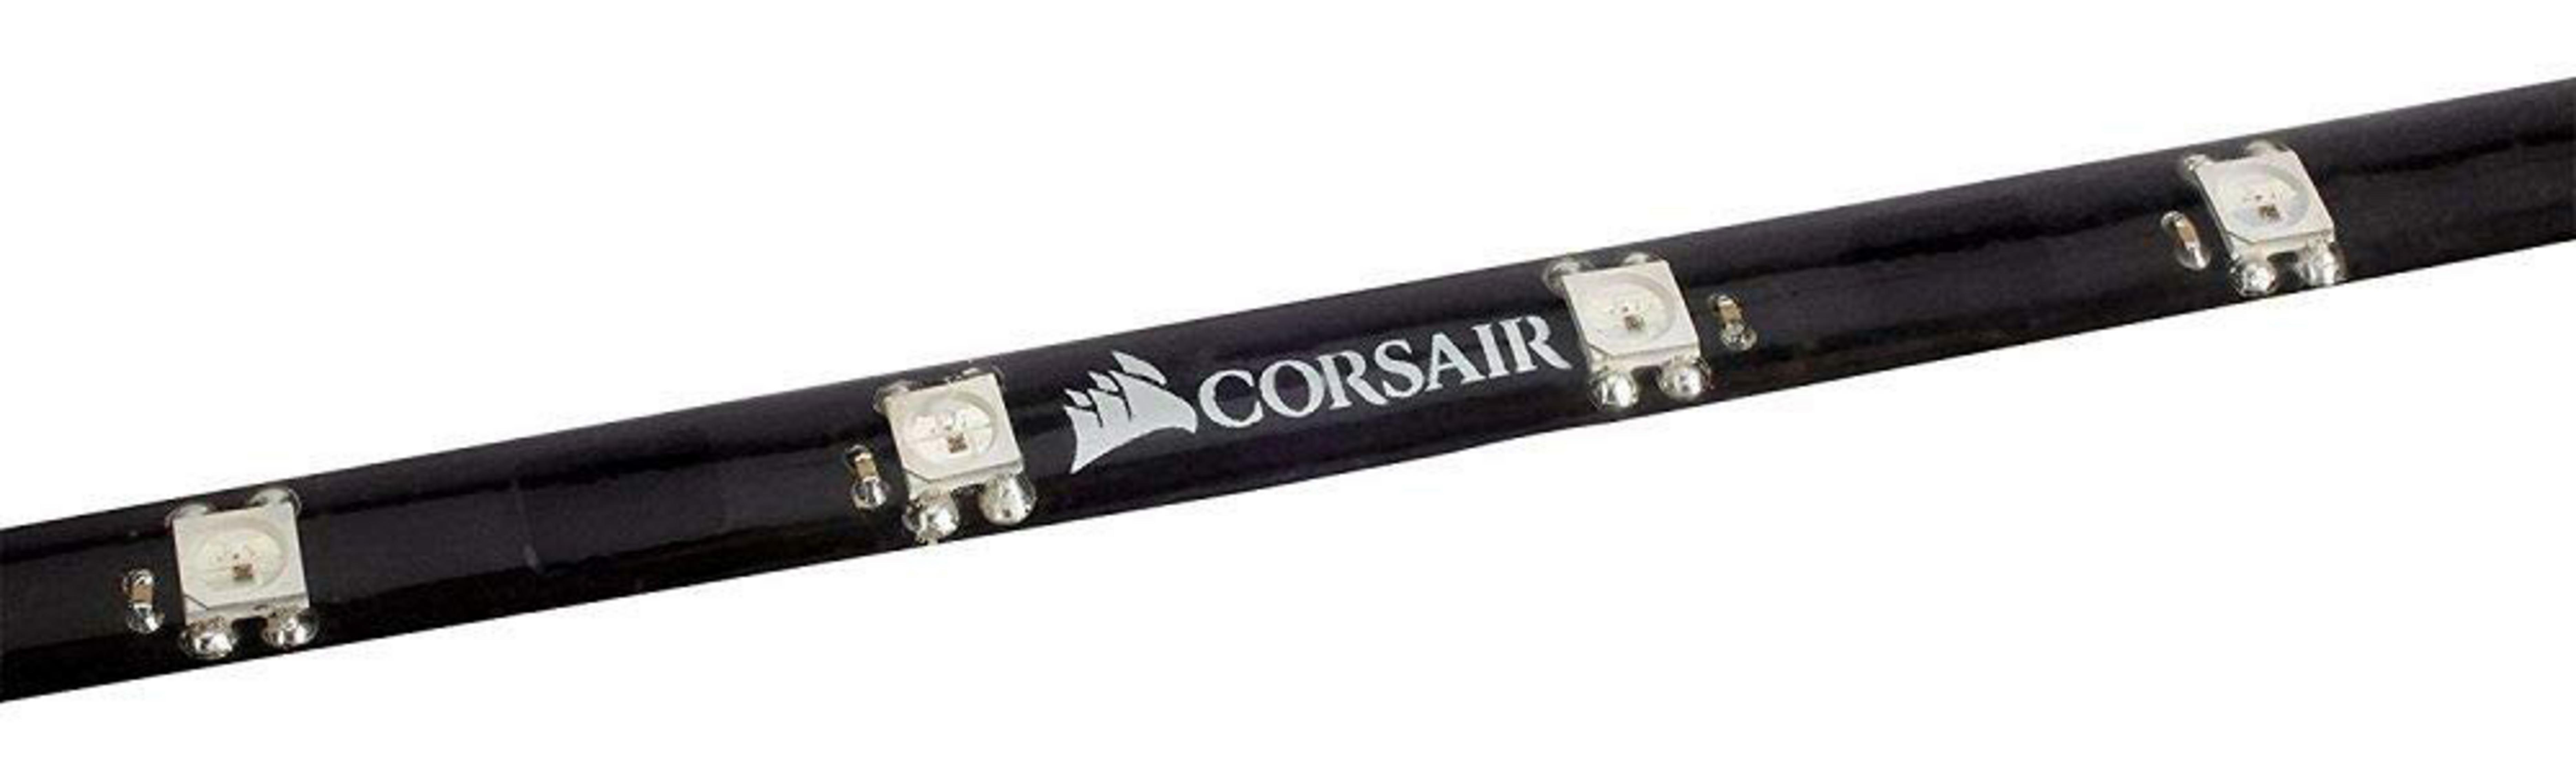 CORSAIR CL-8930002 KIT, 410 PRO LIGHTING Gehäuseleuchte, RGB LED EXPANSION mm